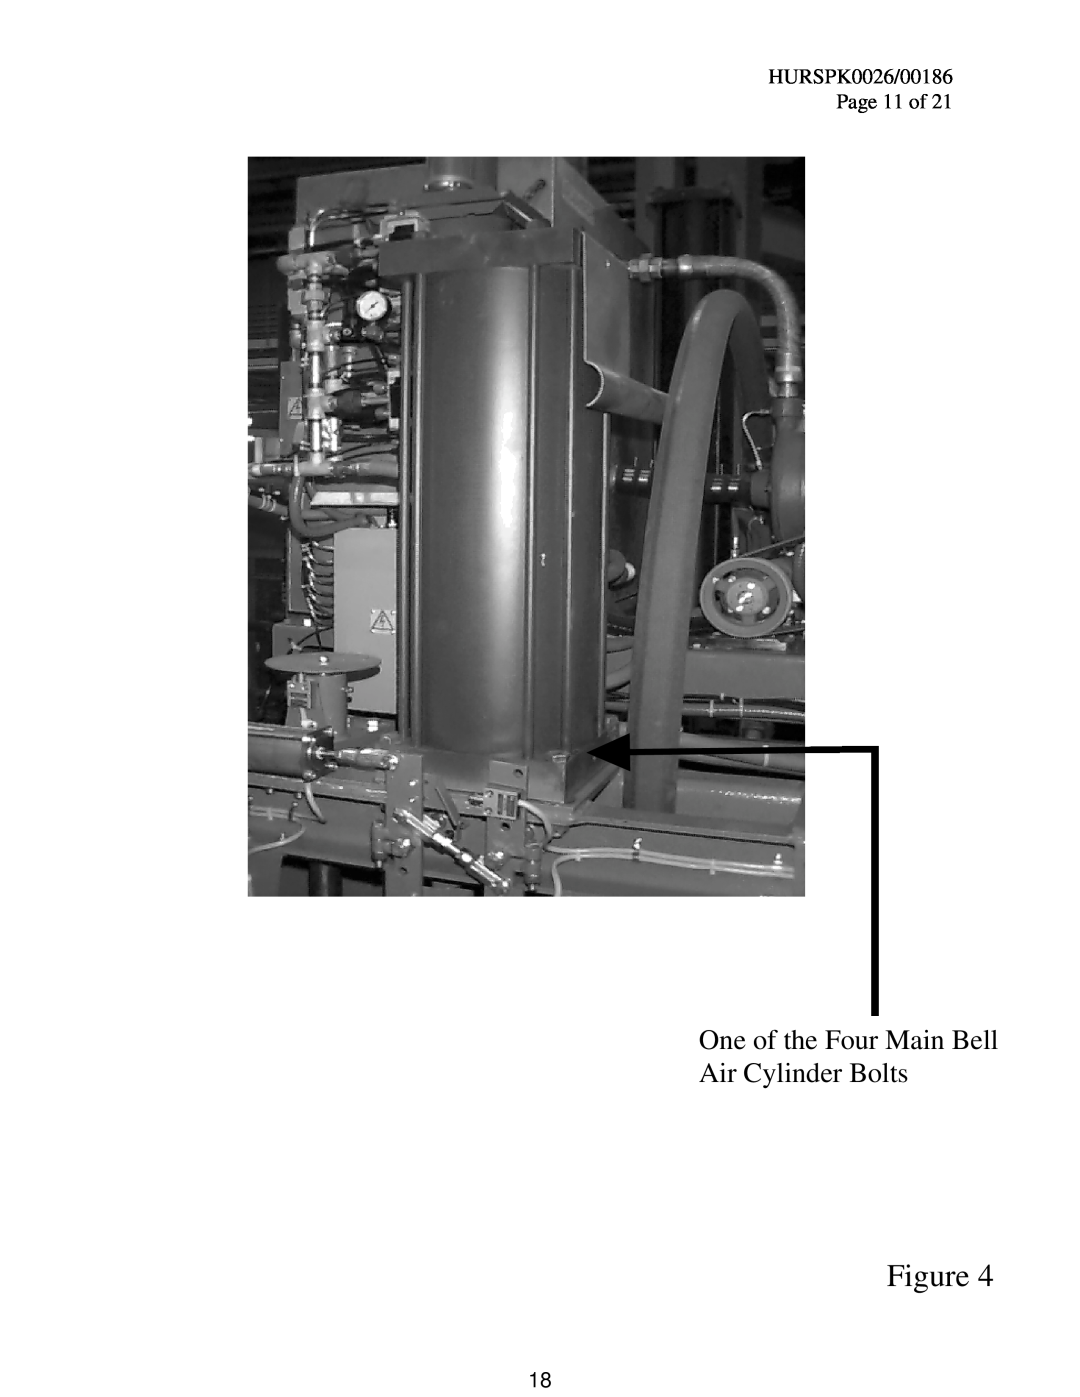 Milnor KURSPK0026, KURSPK0025 manual One of the Four Main Bell Air Cylinder Bolts, HURSPK0026/00186 